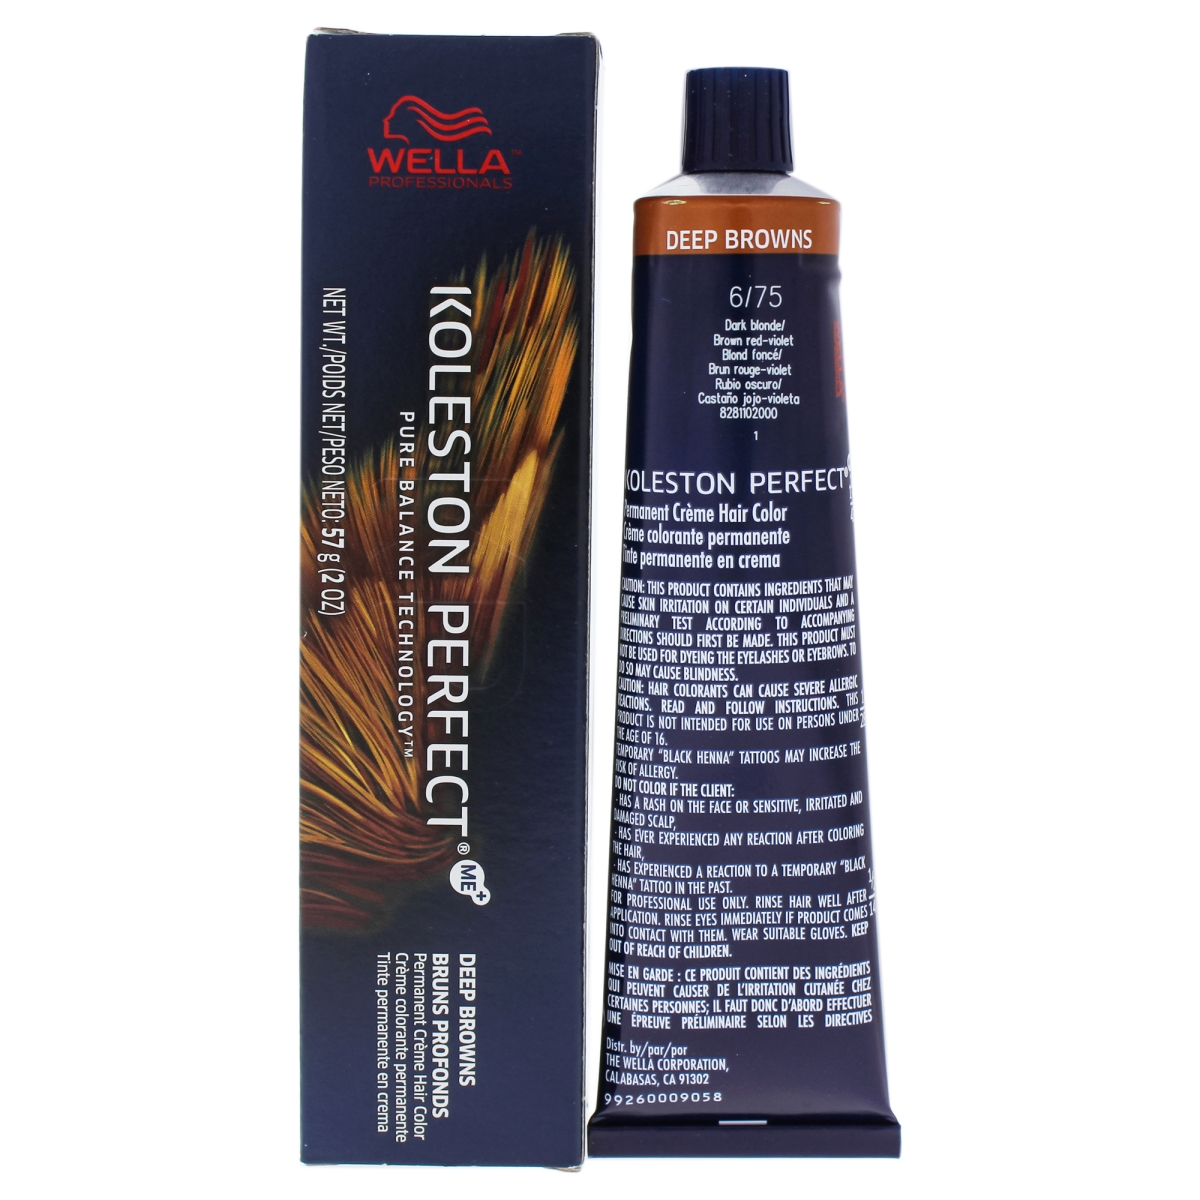 wella I0087112 Koleston Perfect Permanent Creme Hair Color for Unisex - 6 75 Dark Blonde & Brown Red-Violet - 2 oz